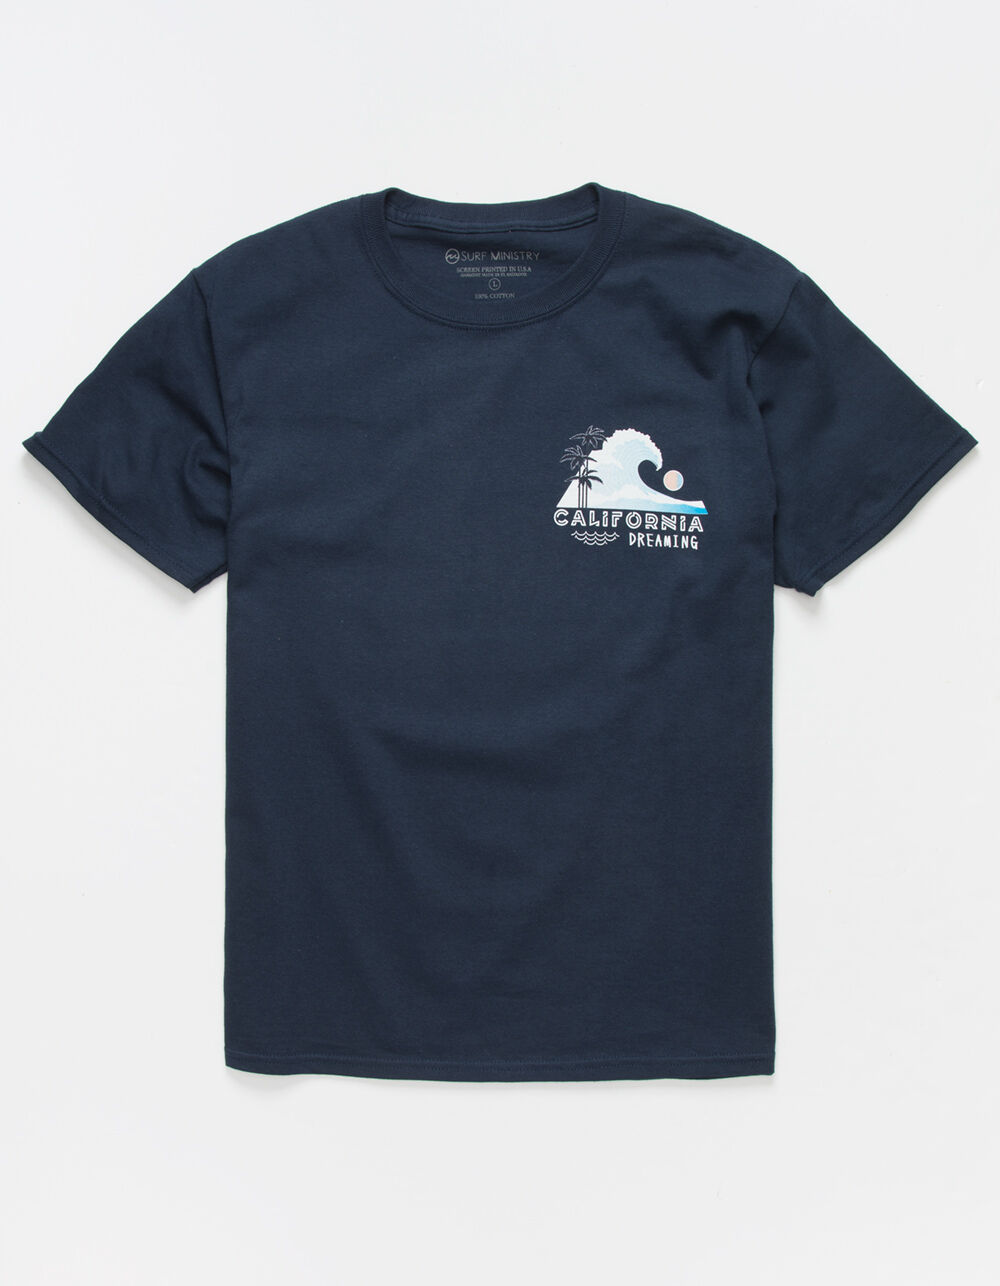 SURF MINISTRY California Dreaming Boys T-Shirt - NAVY | Tillys